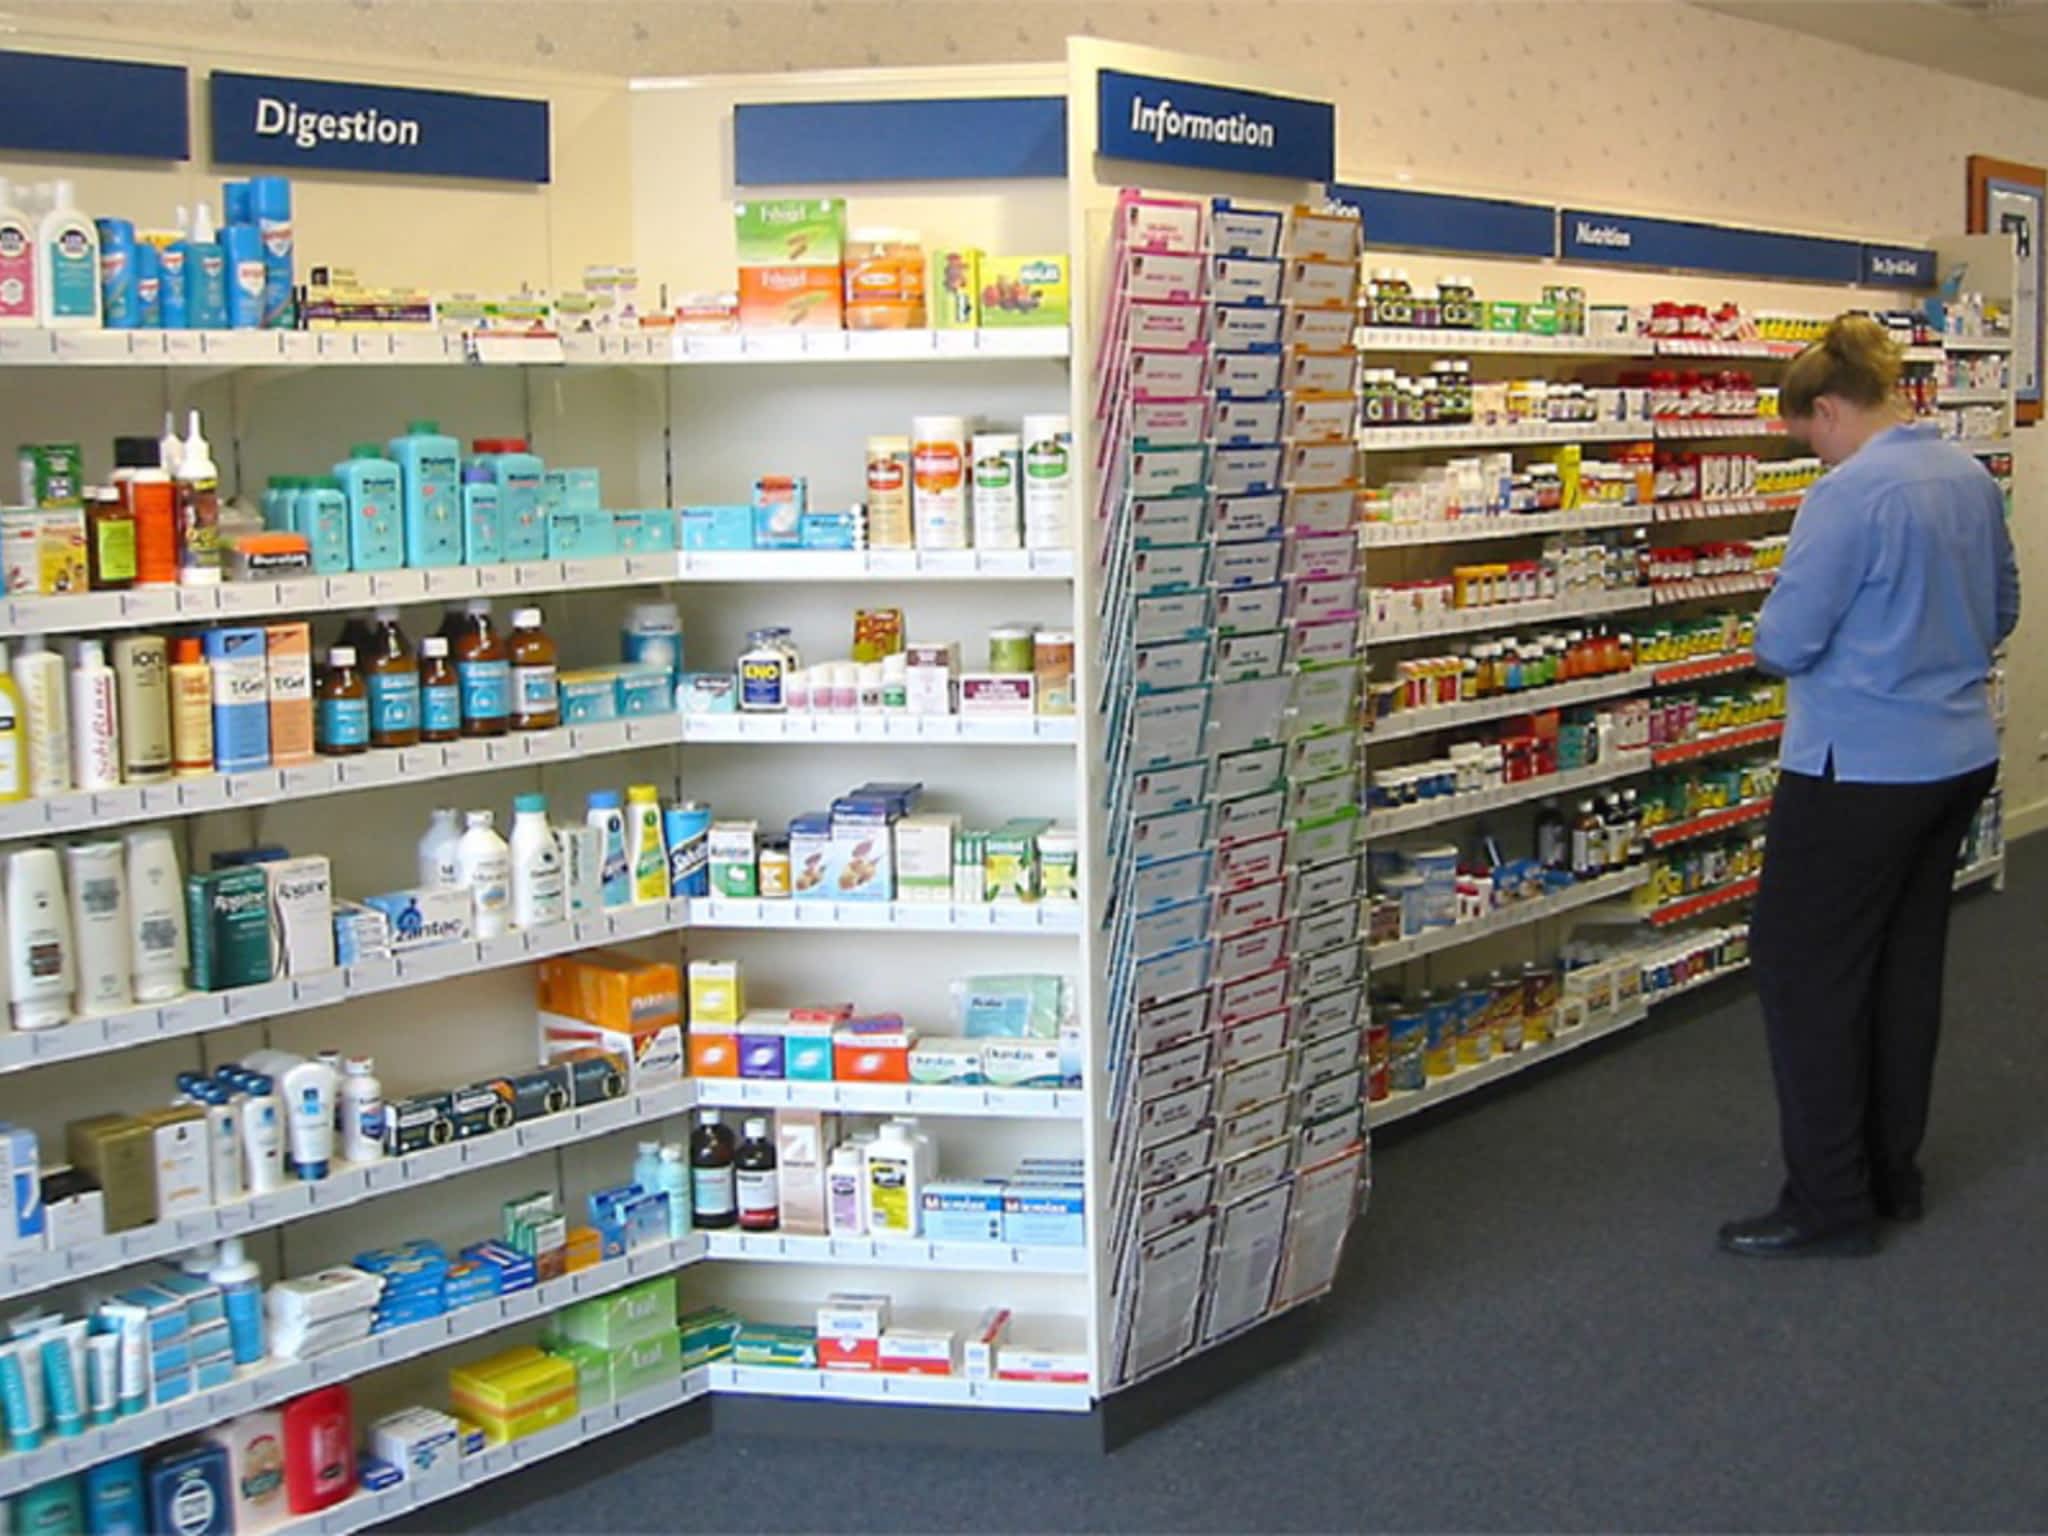 photo The Medicine Shoppe Pharmacy